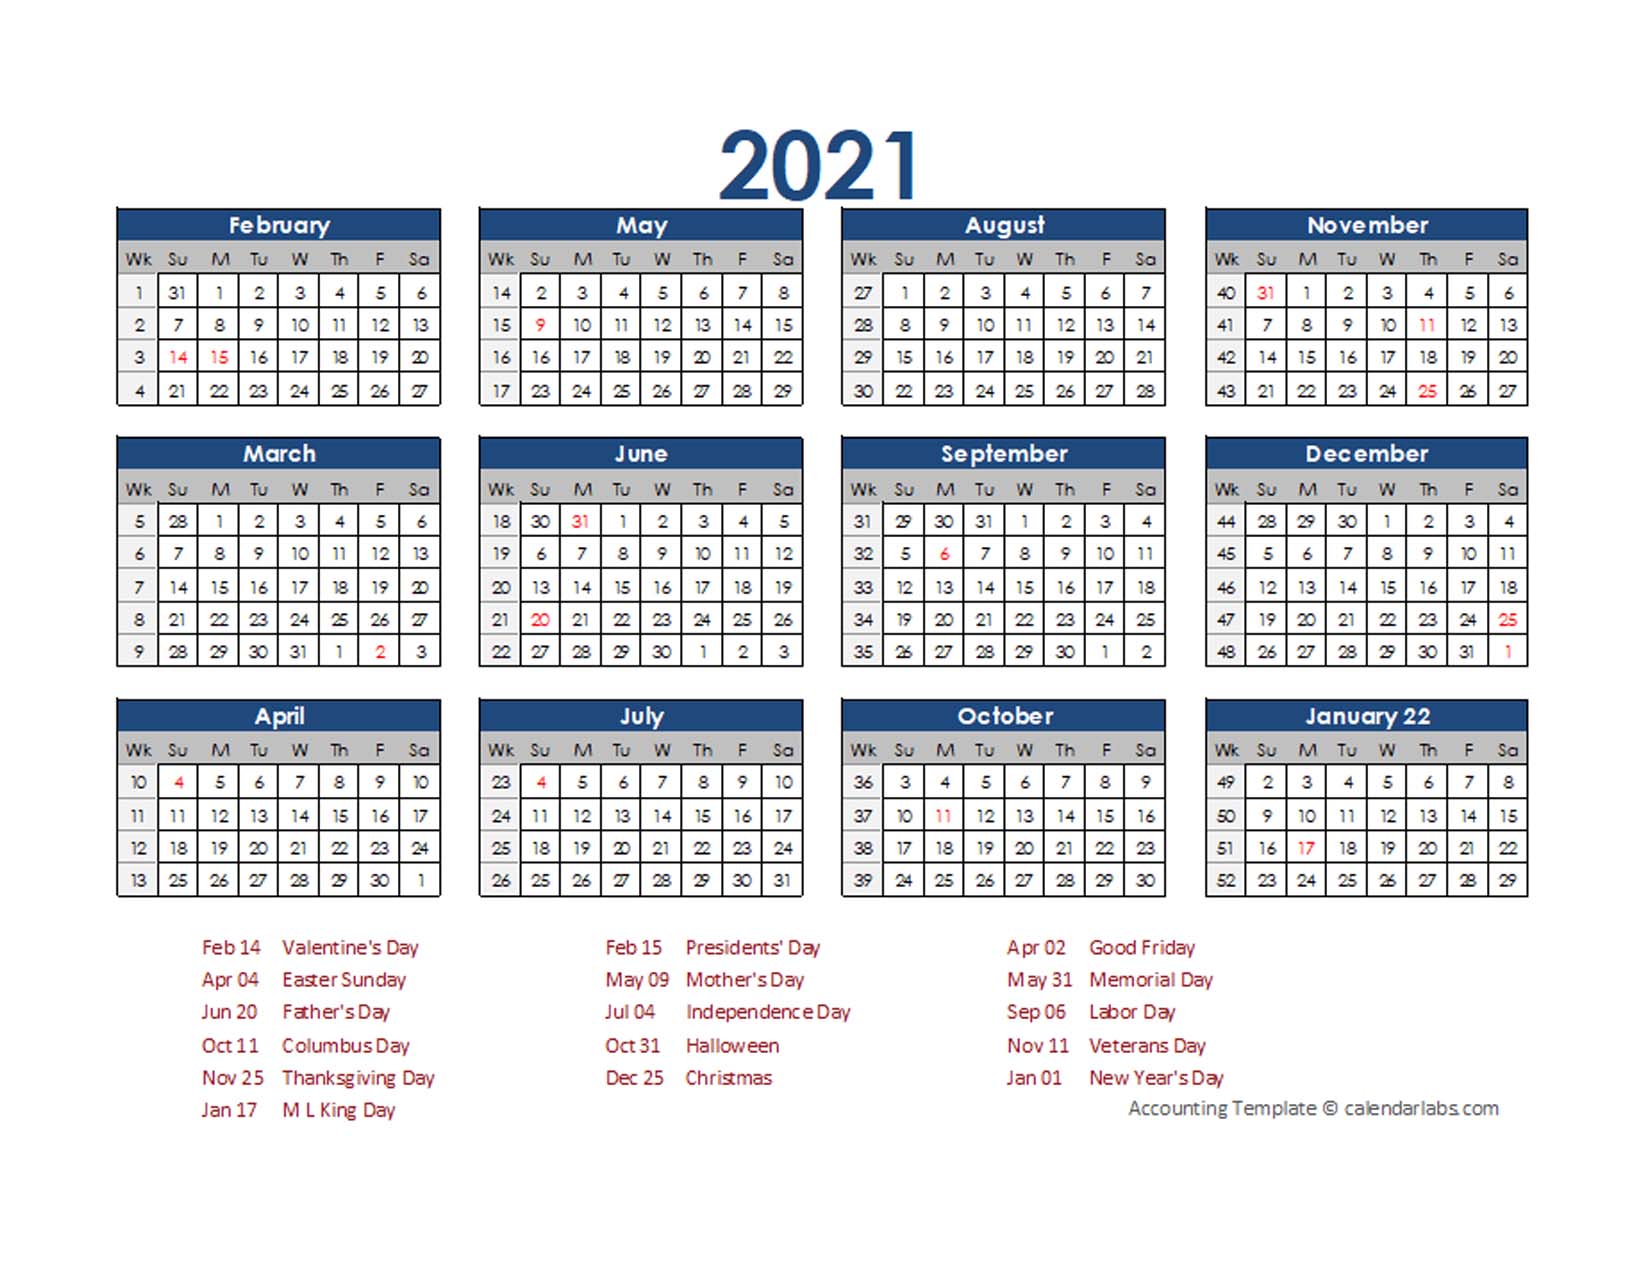 2021 Accounting Calendar 454 Free Printable Templates